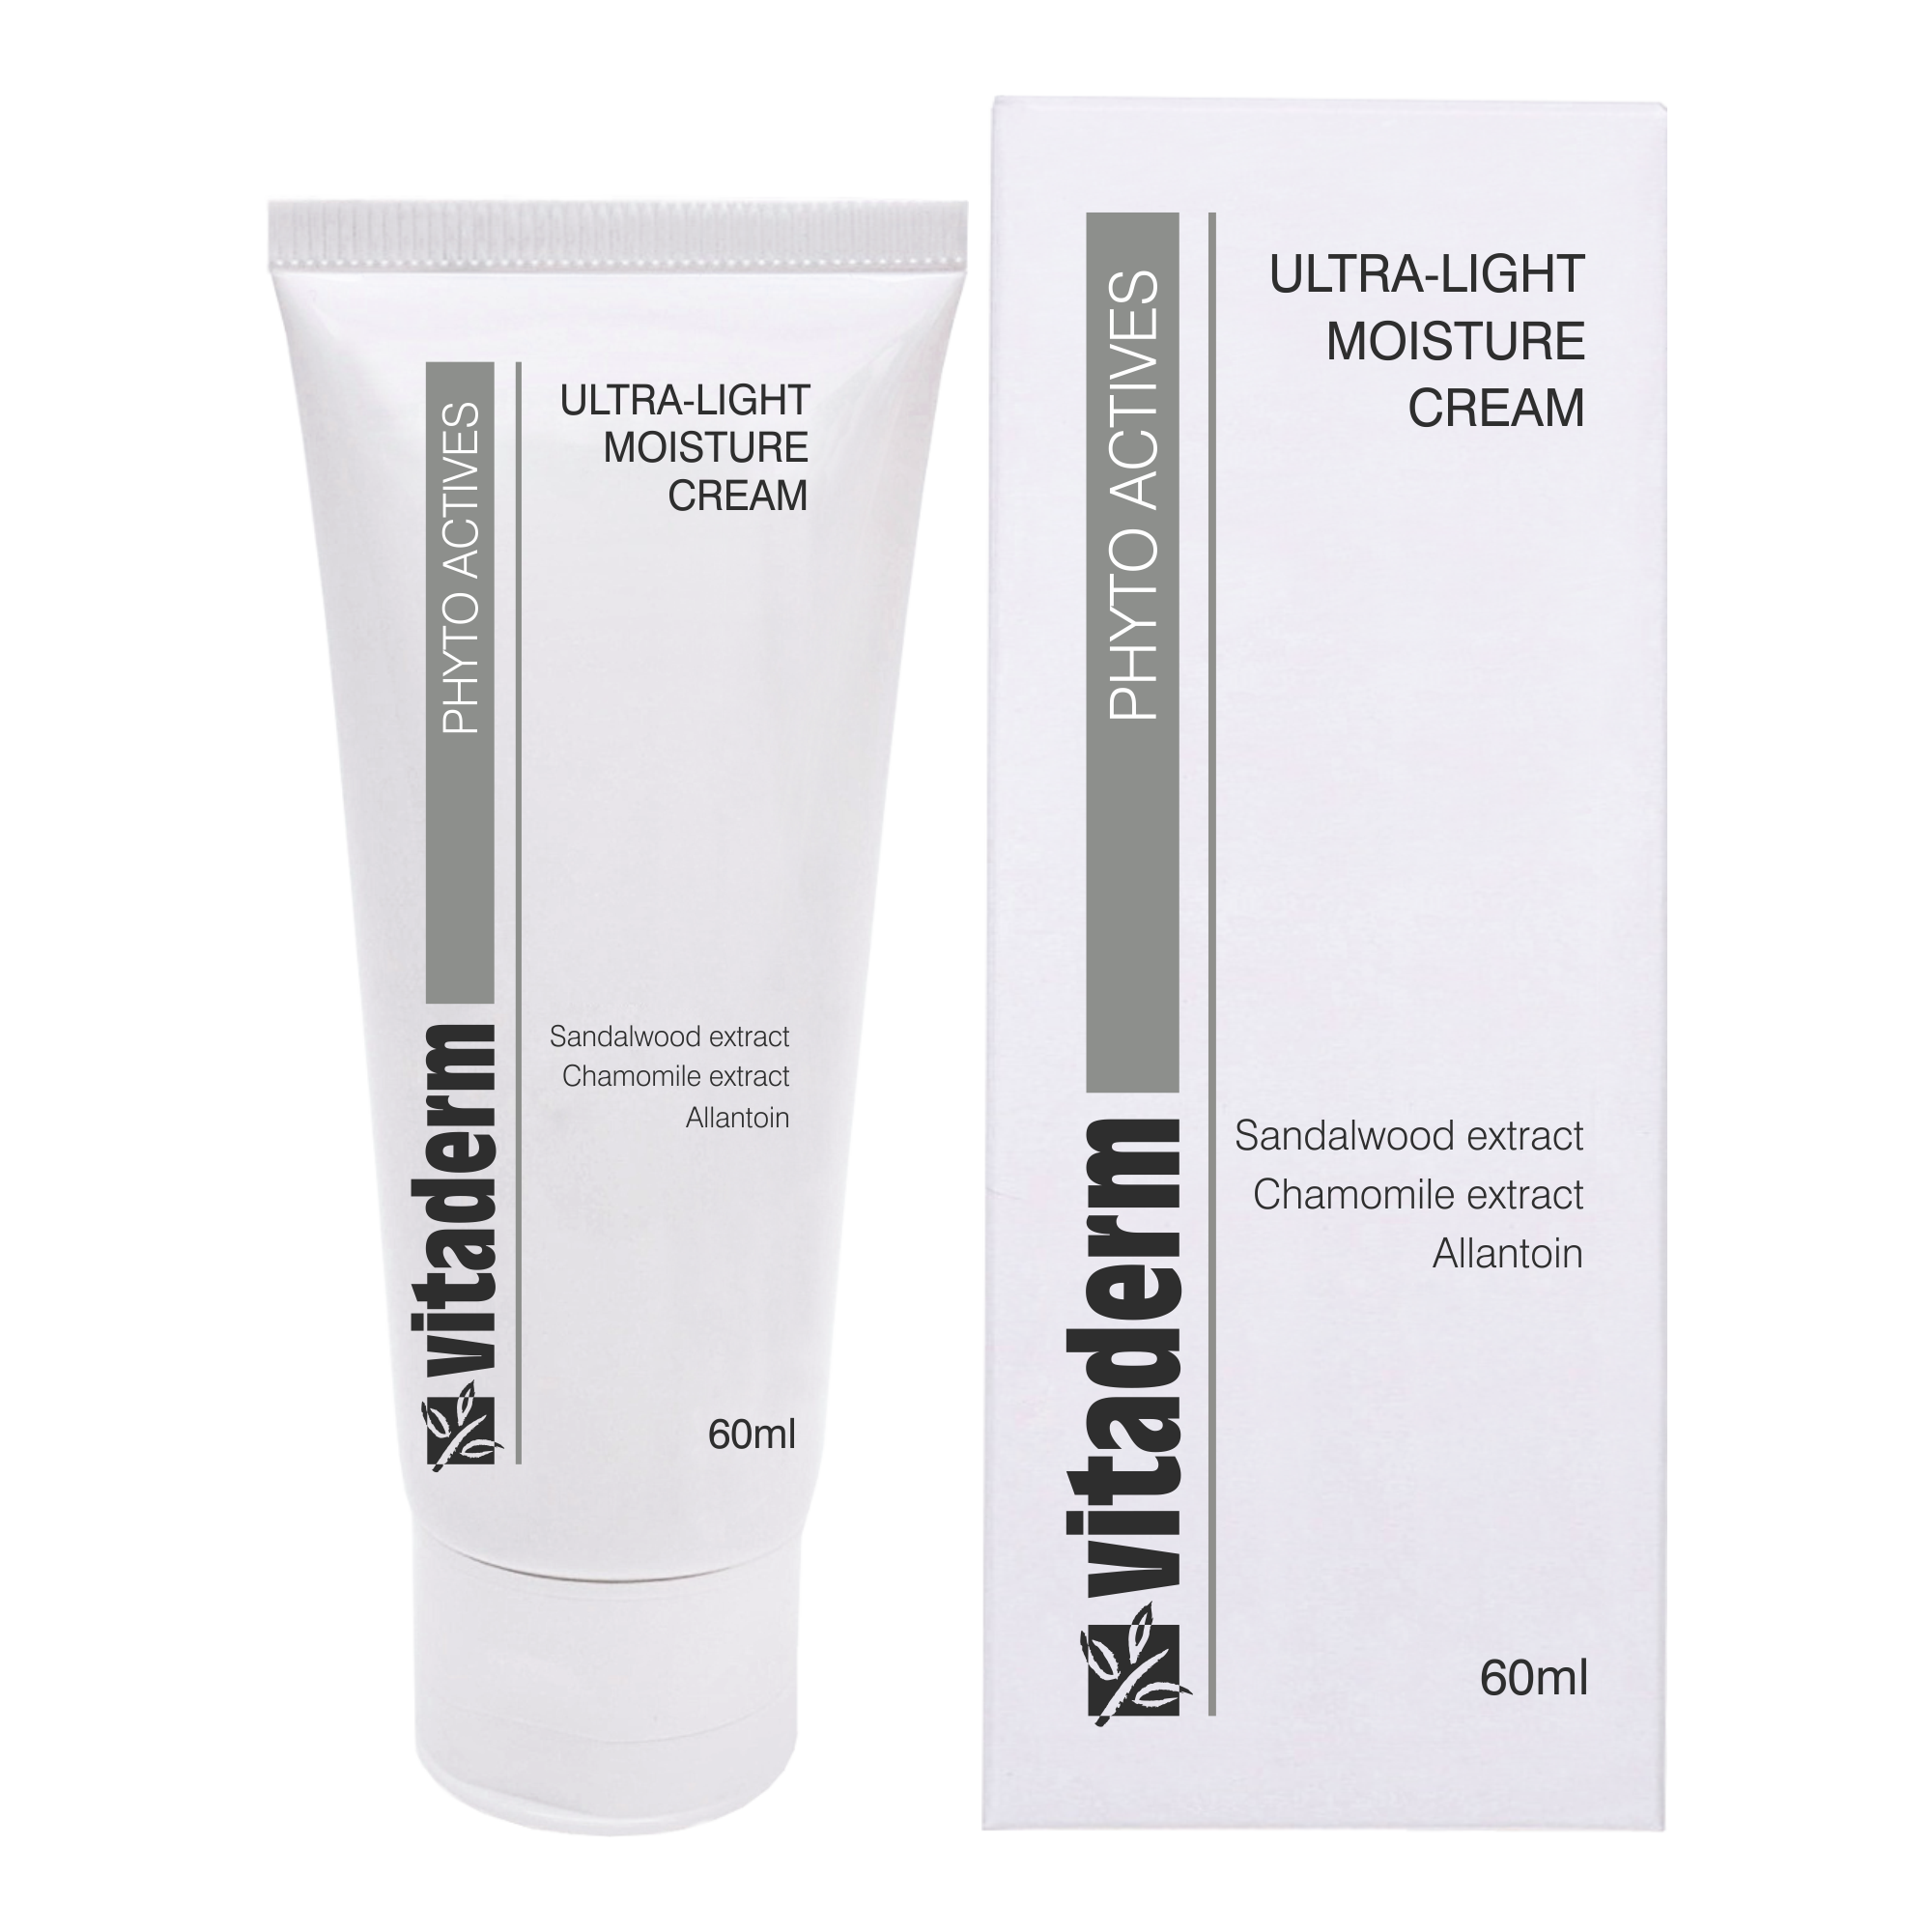 moisturisers-ultra-light-moisture-cream